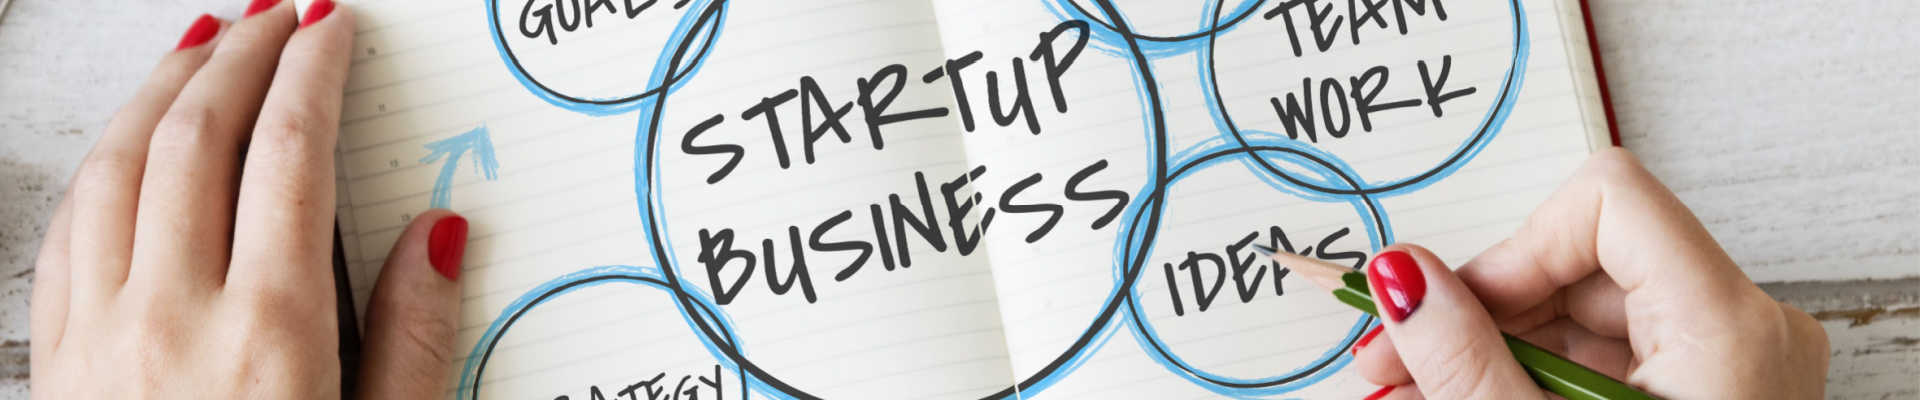 Start up business brainstorm